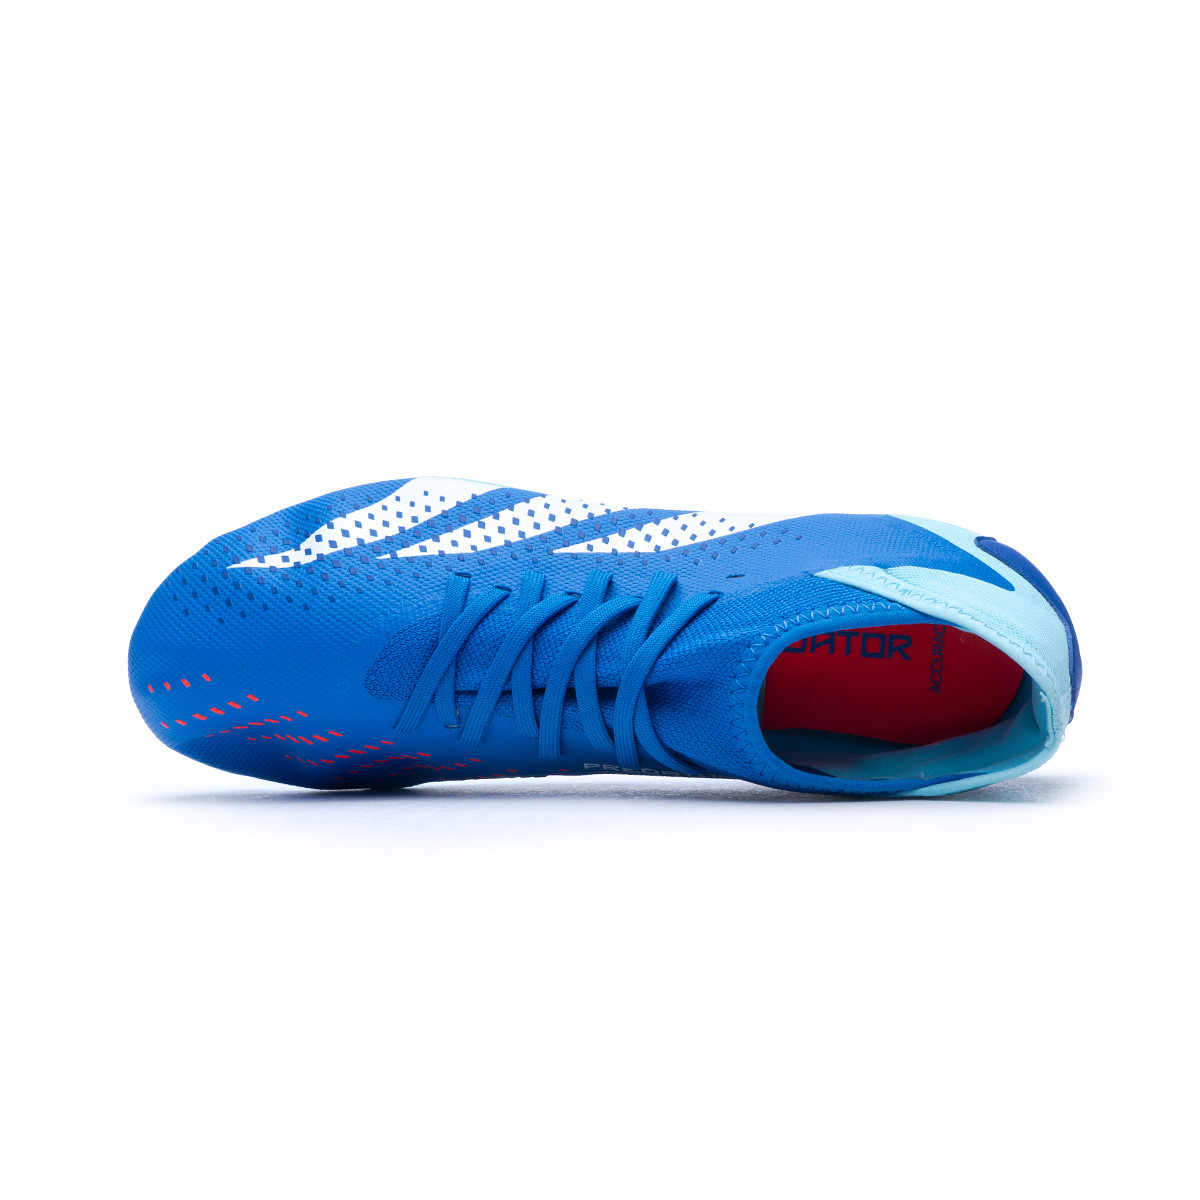 adidas Emotion Predator white-Bliss Bright Boots blue royal-Ftwr Fútbol Accuracy.3 FG - Football